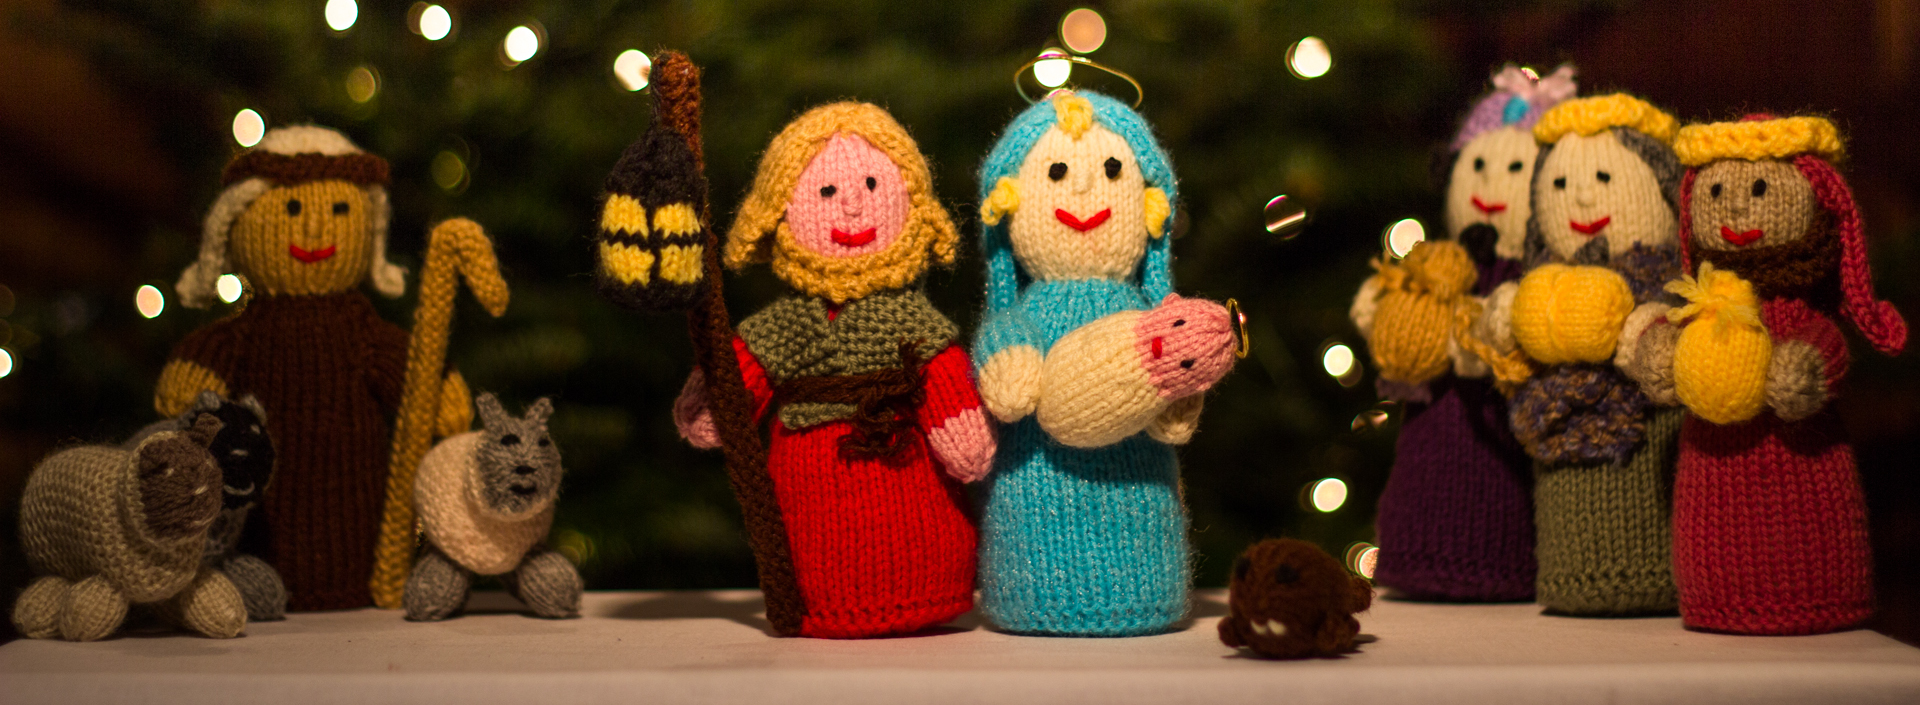 A knitted nativity scene.